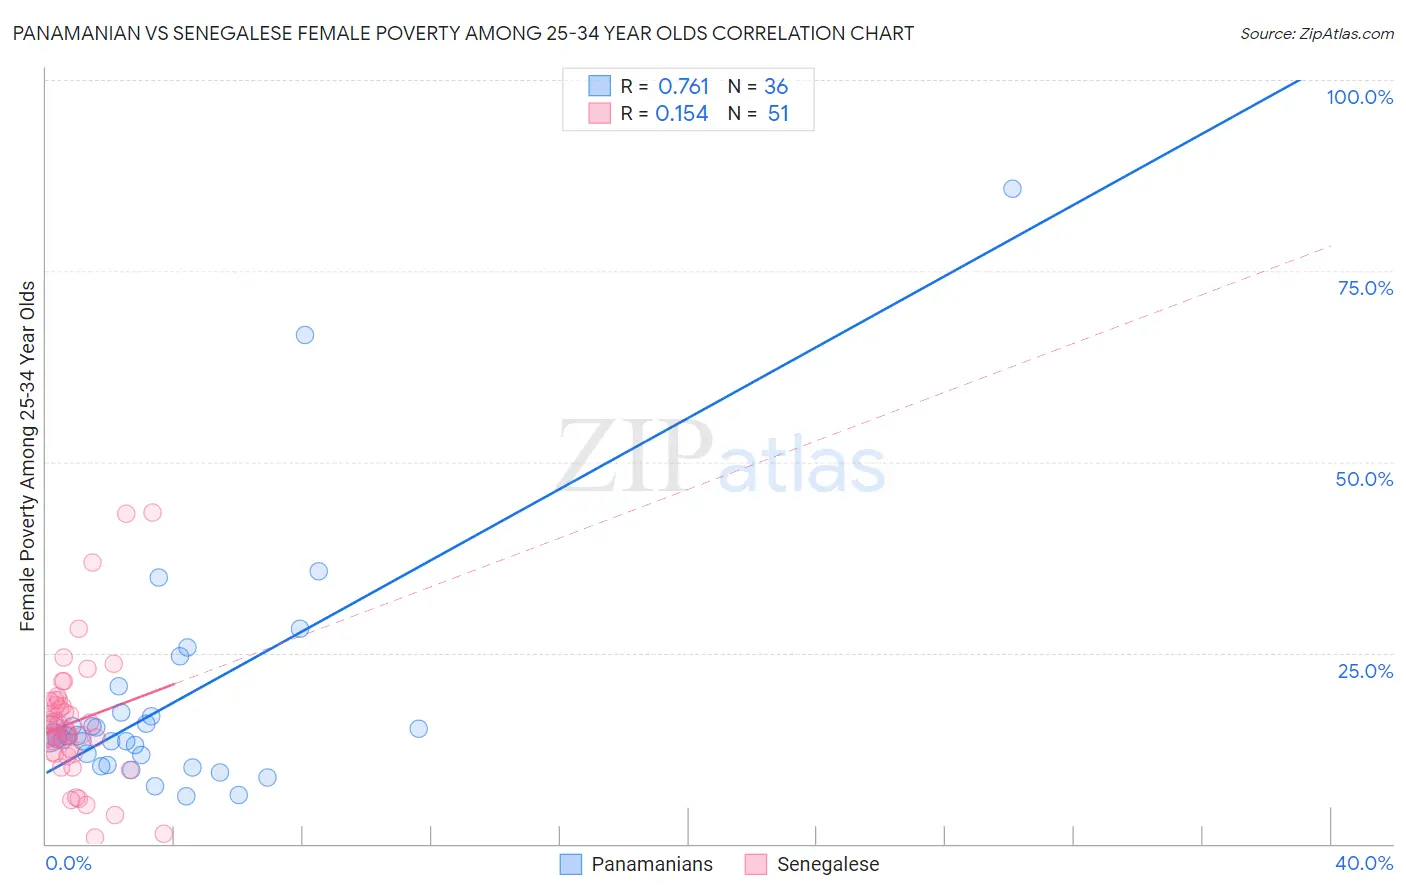 Panamanian vs Senegalese Female Poverty Among 25-34 Year Olds